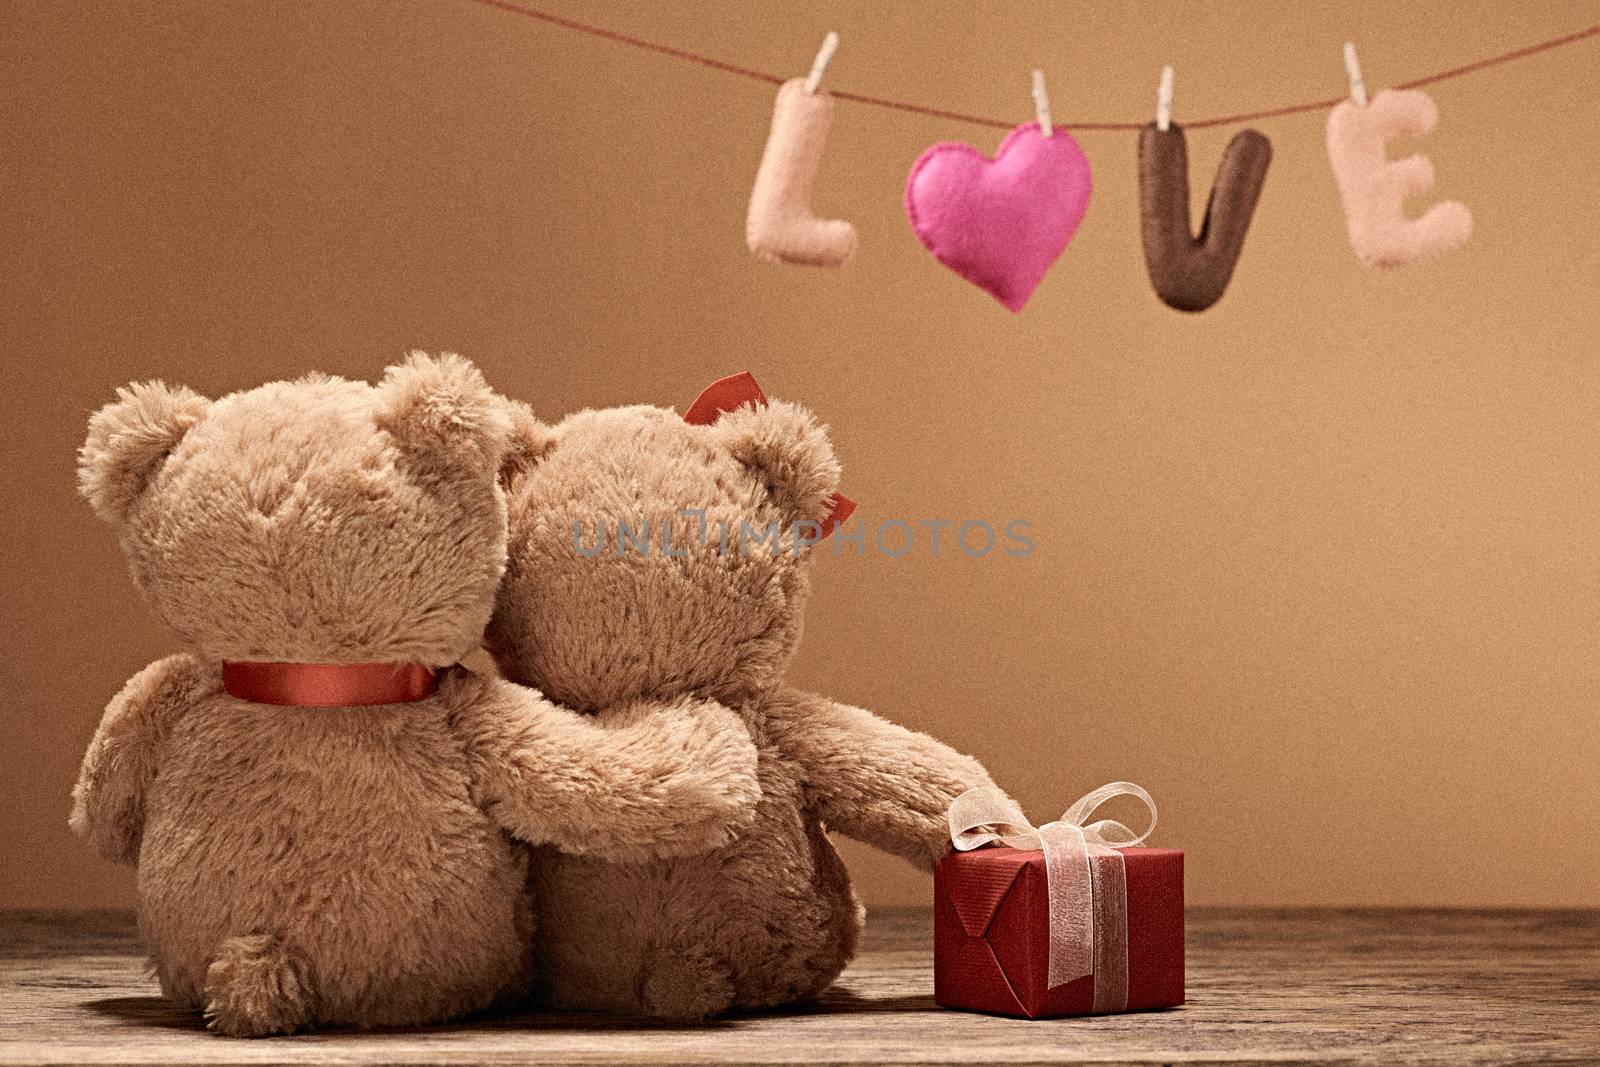 Valentines Day. Word Love heart. Couple Teddy Bears in embrace, hugging date. Handmade, gift. Vintage retro romantic. Unusual creative greeting card, wood. Family wedding friendship. Film grain effect